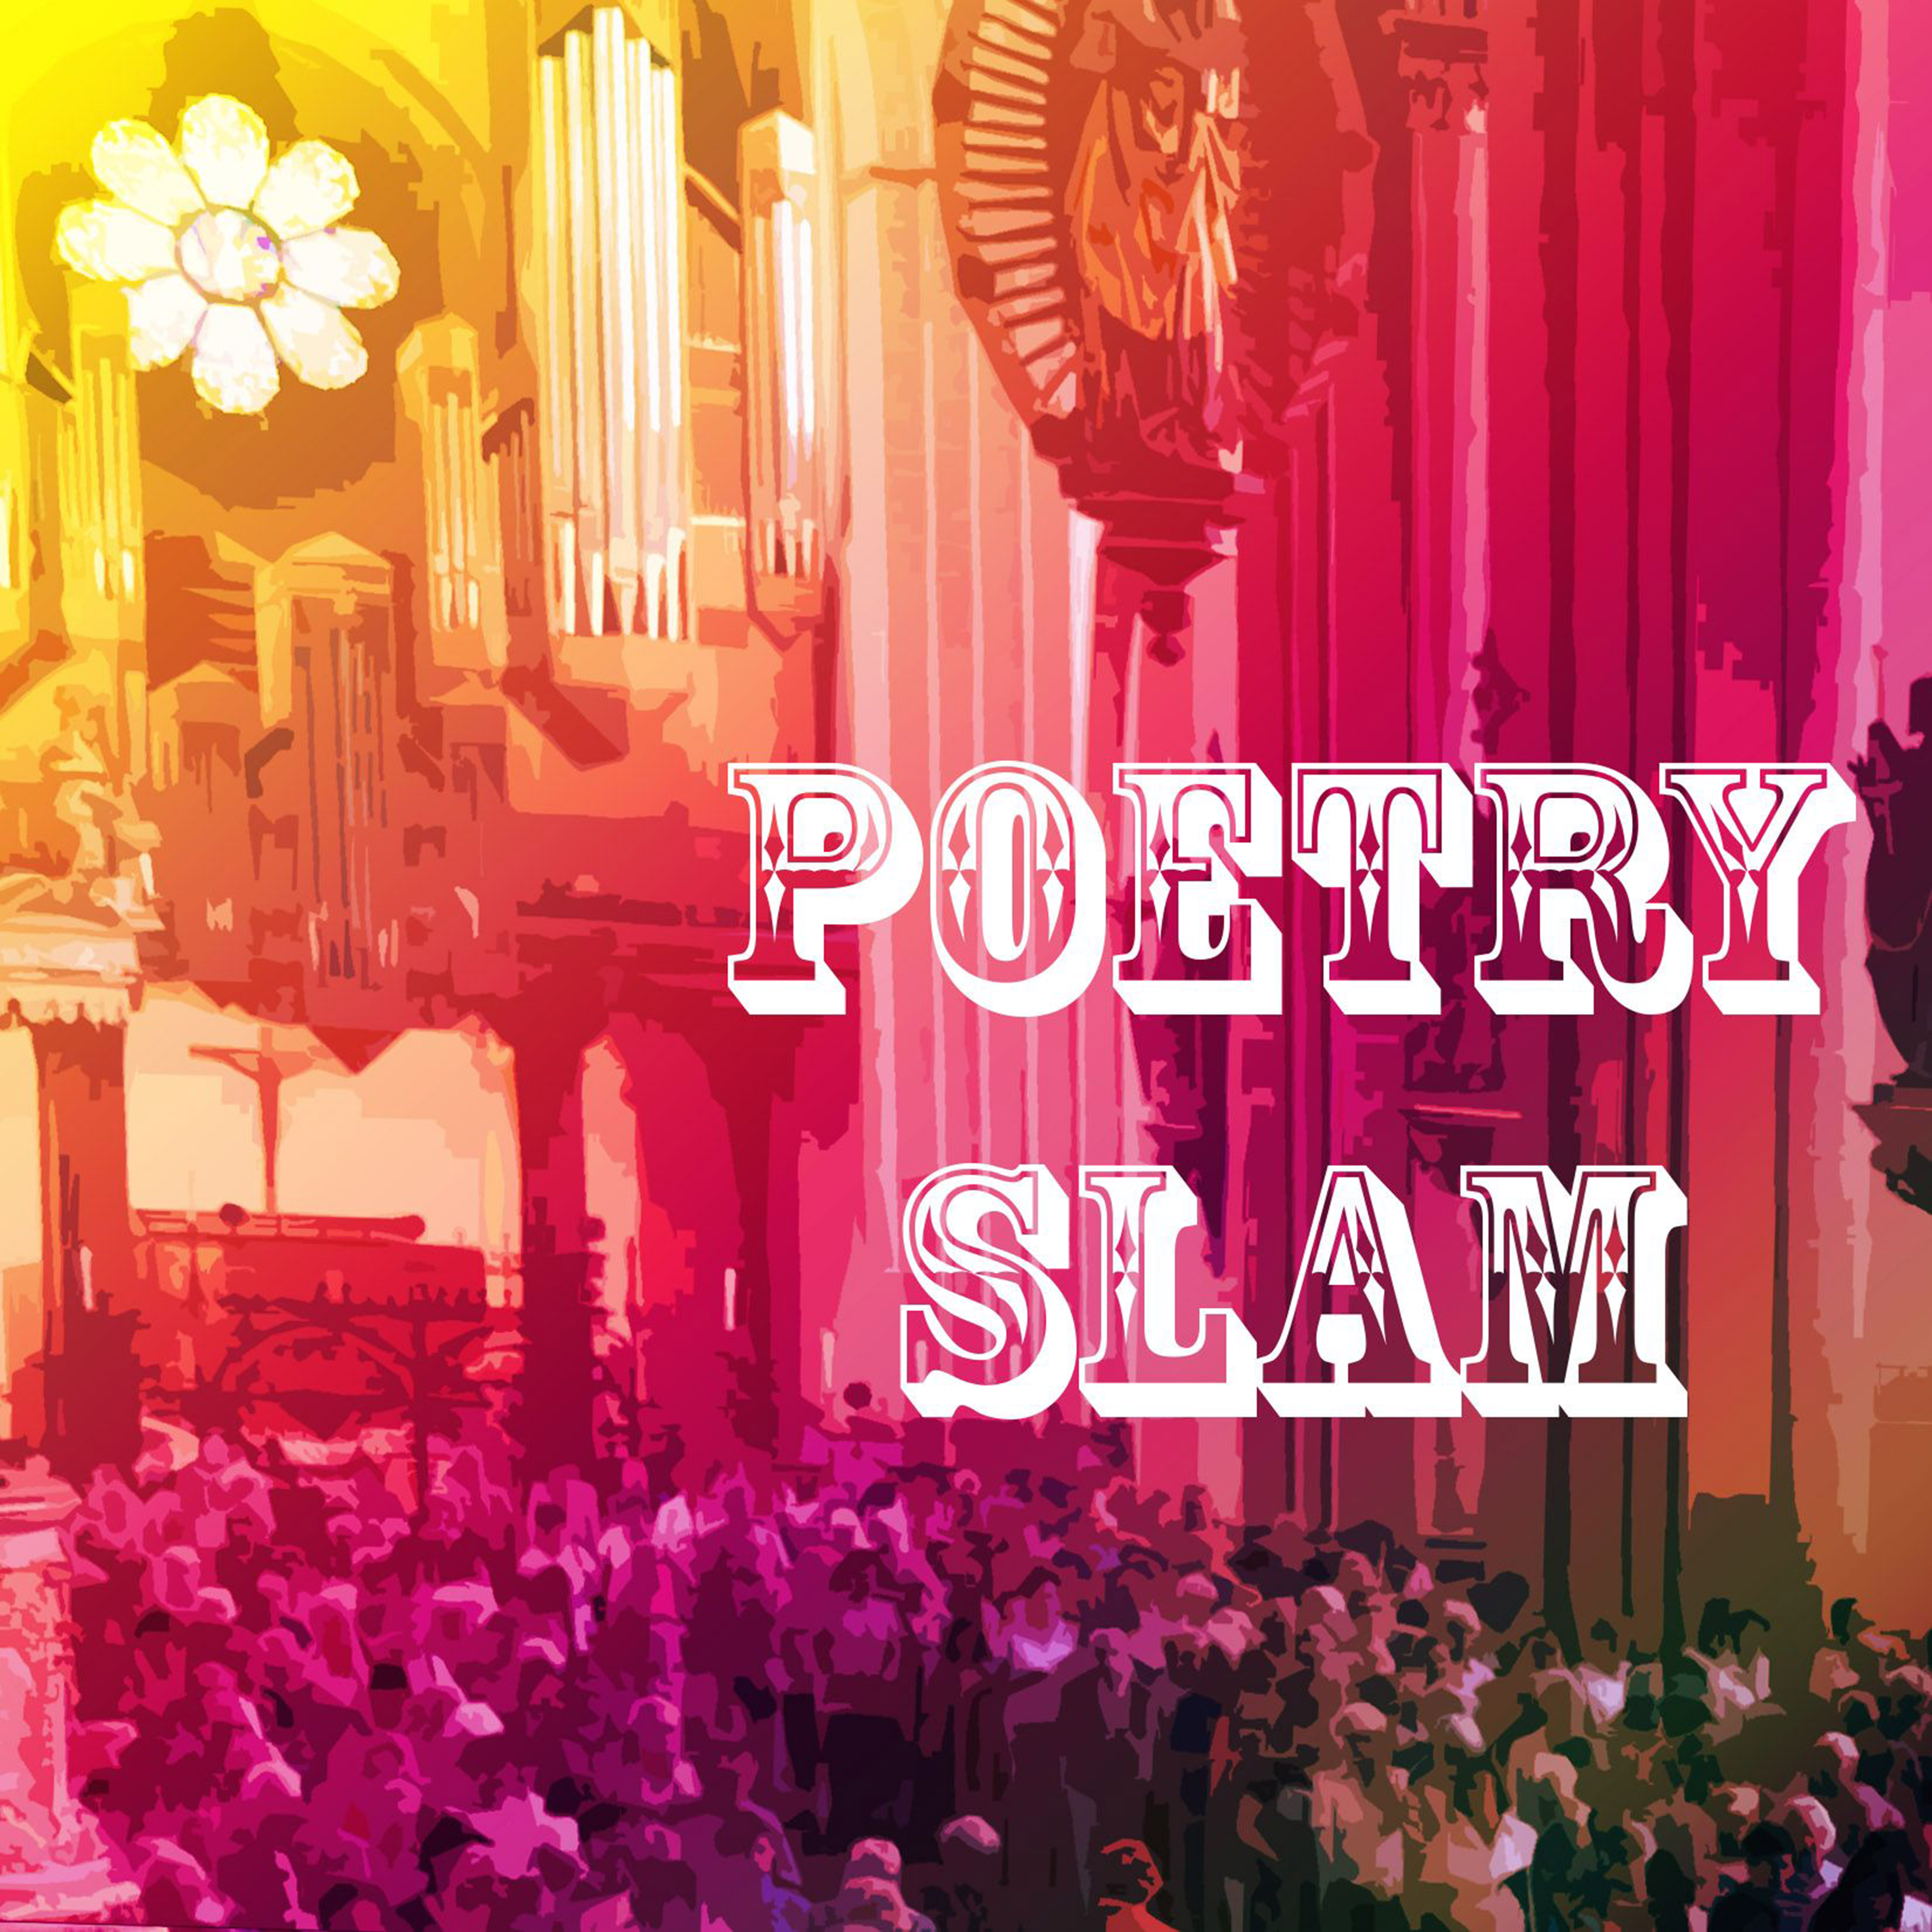 Plakat des Poetry-Slams im Paderborner Dom, Quelle: Lektora Verlag